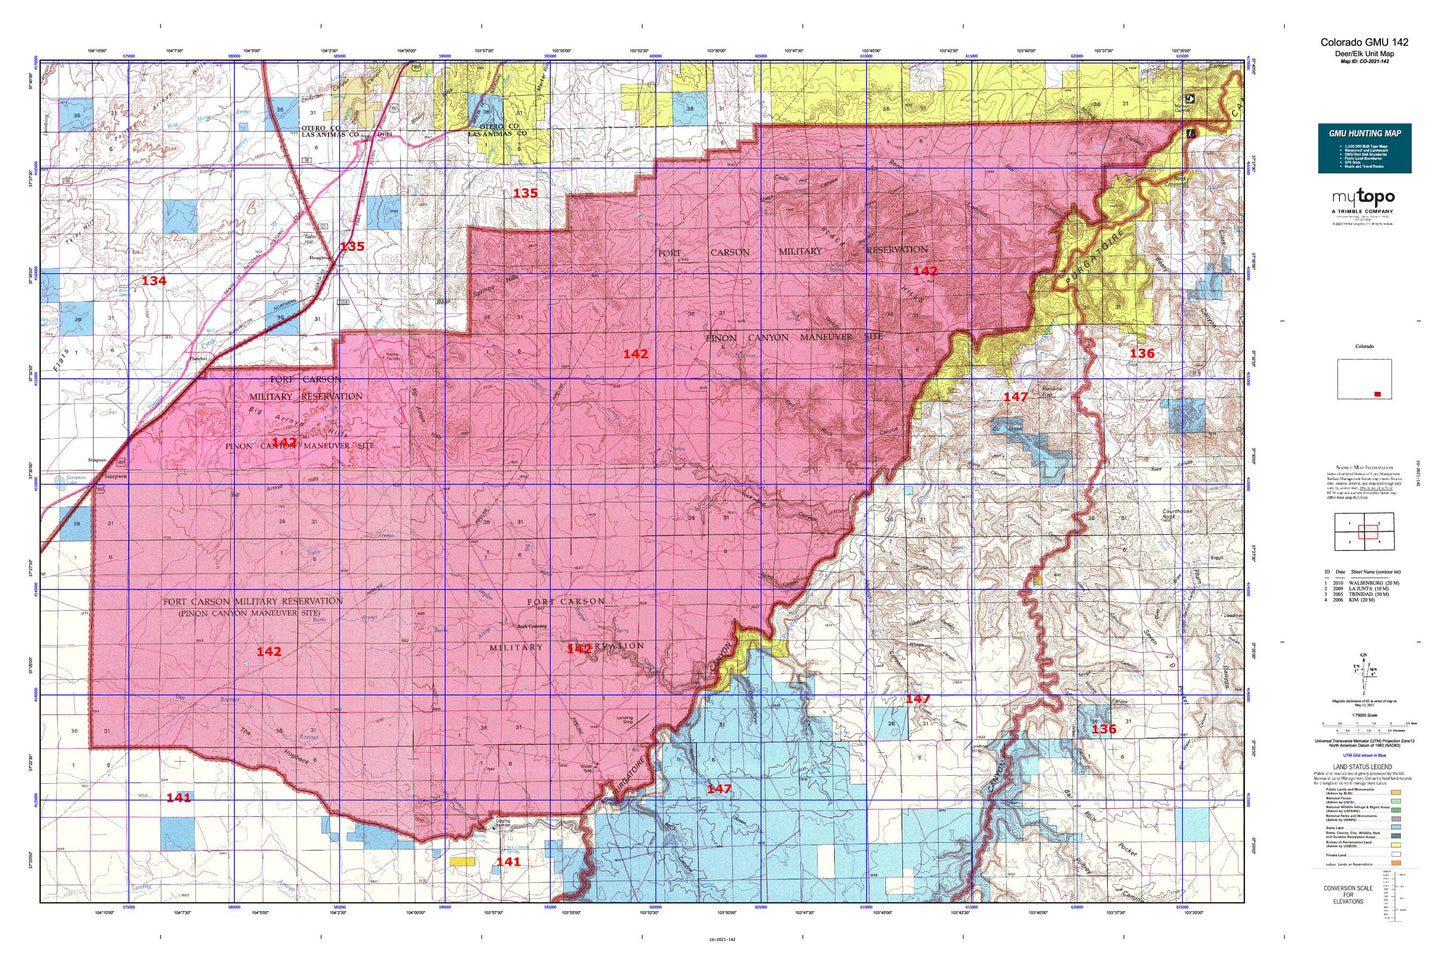 Colorado GMU 142 Map Image